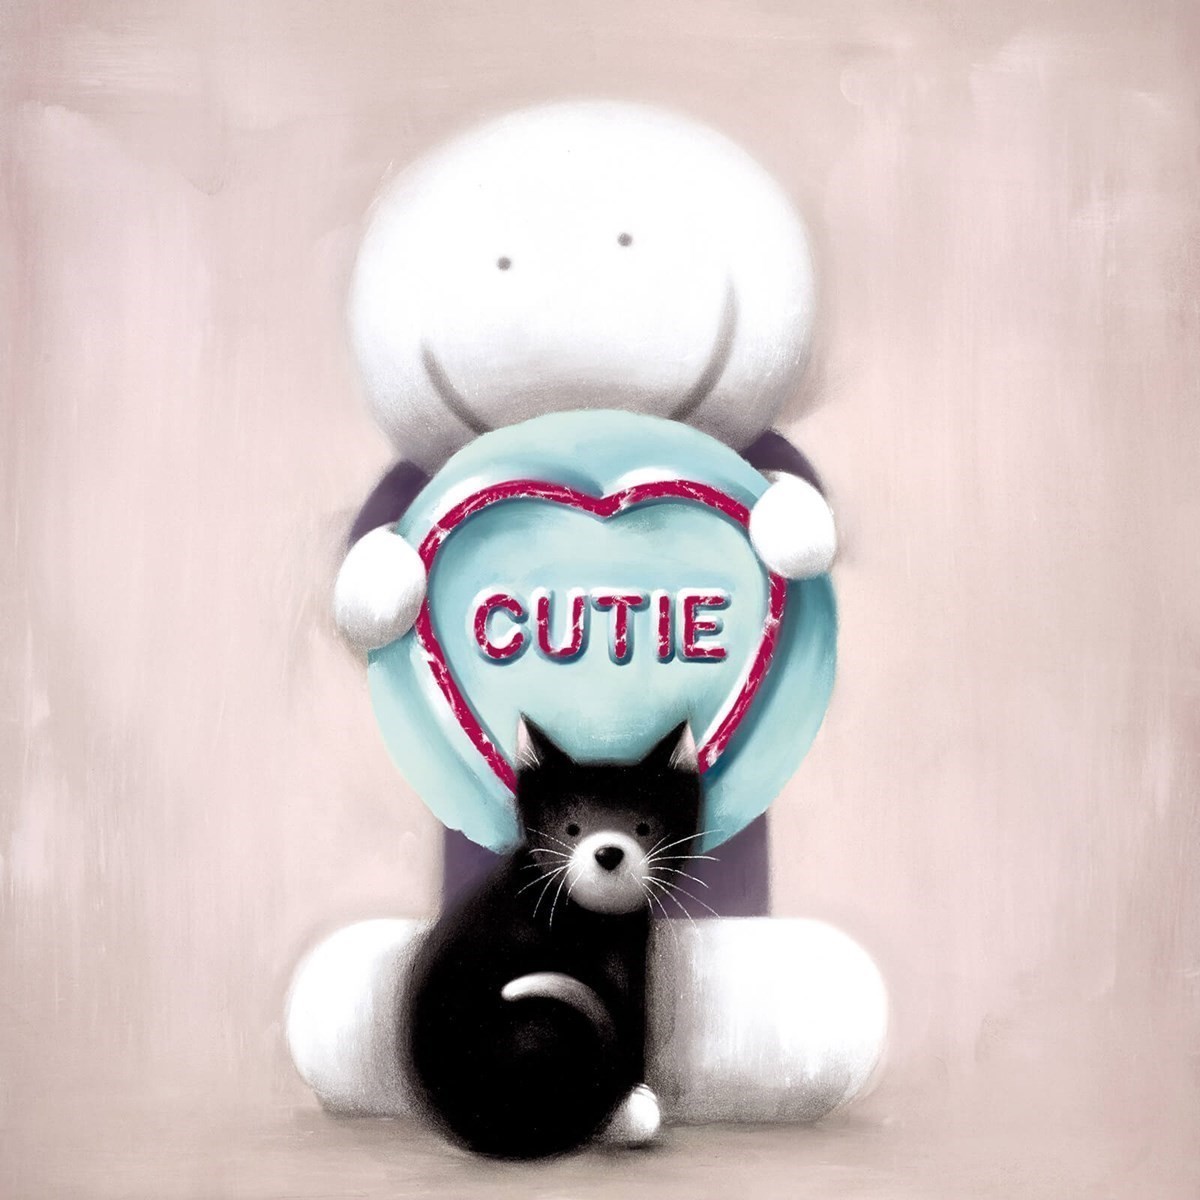 Super Cutie by Doug Hyde